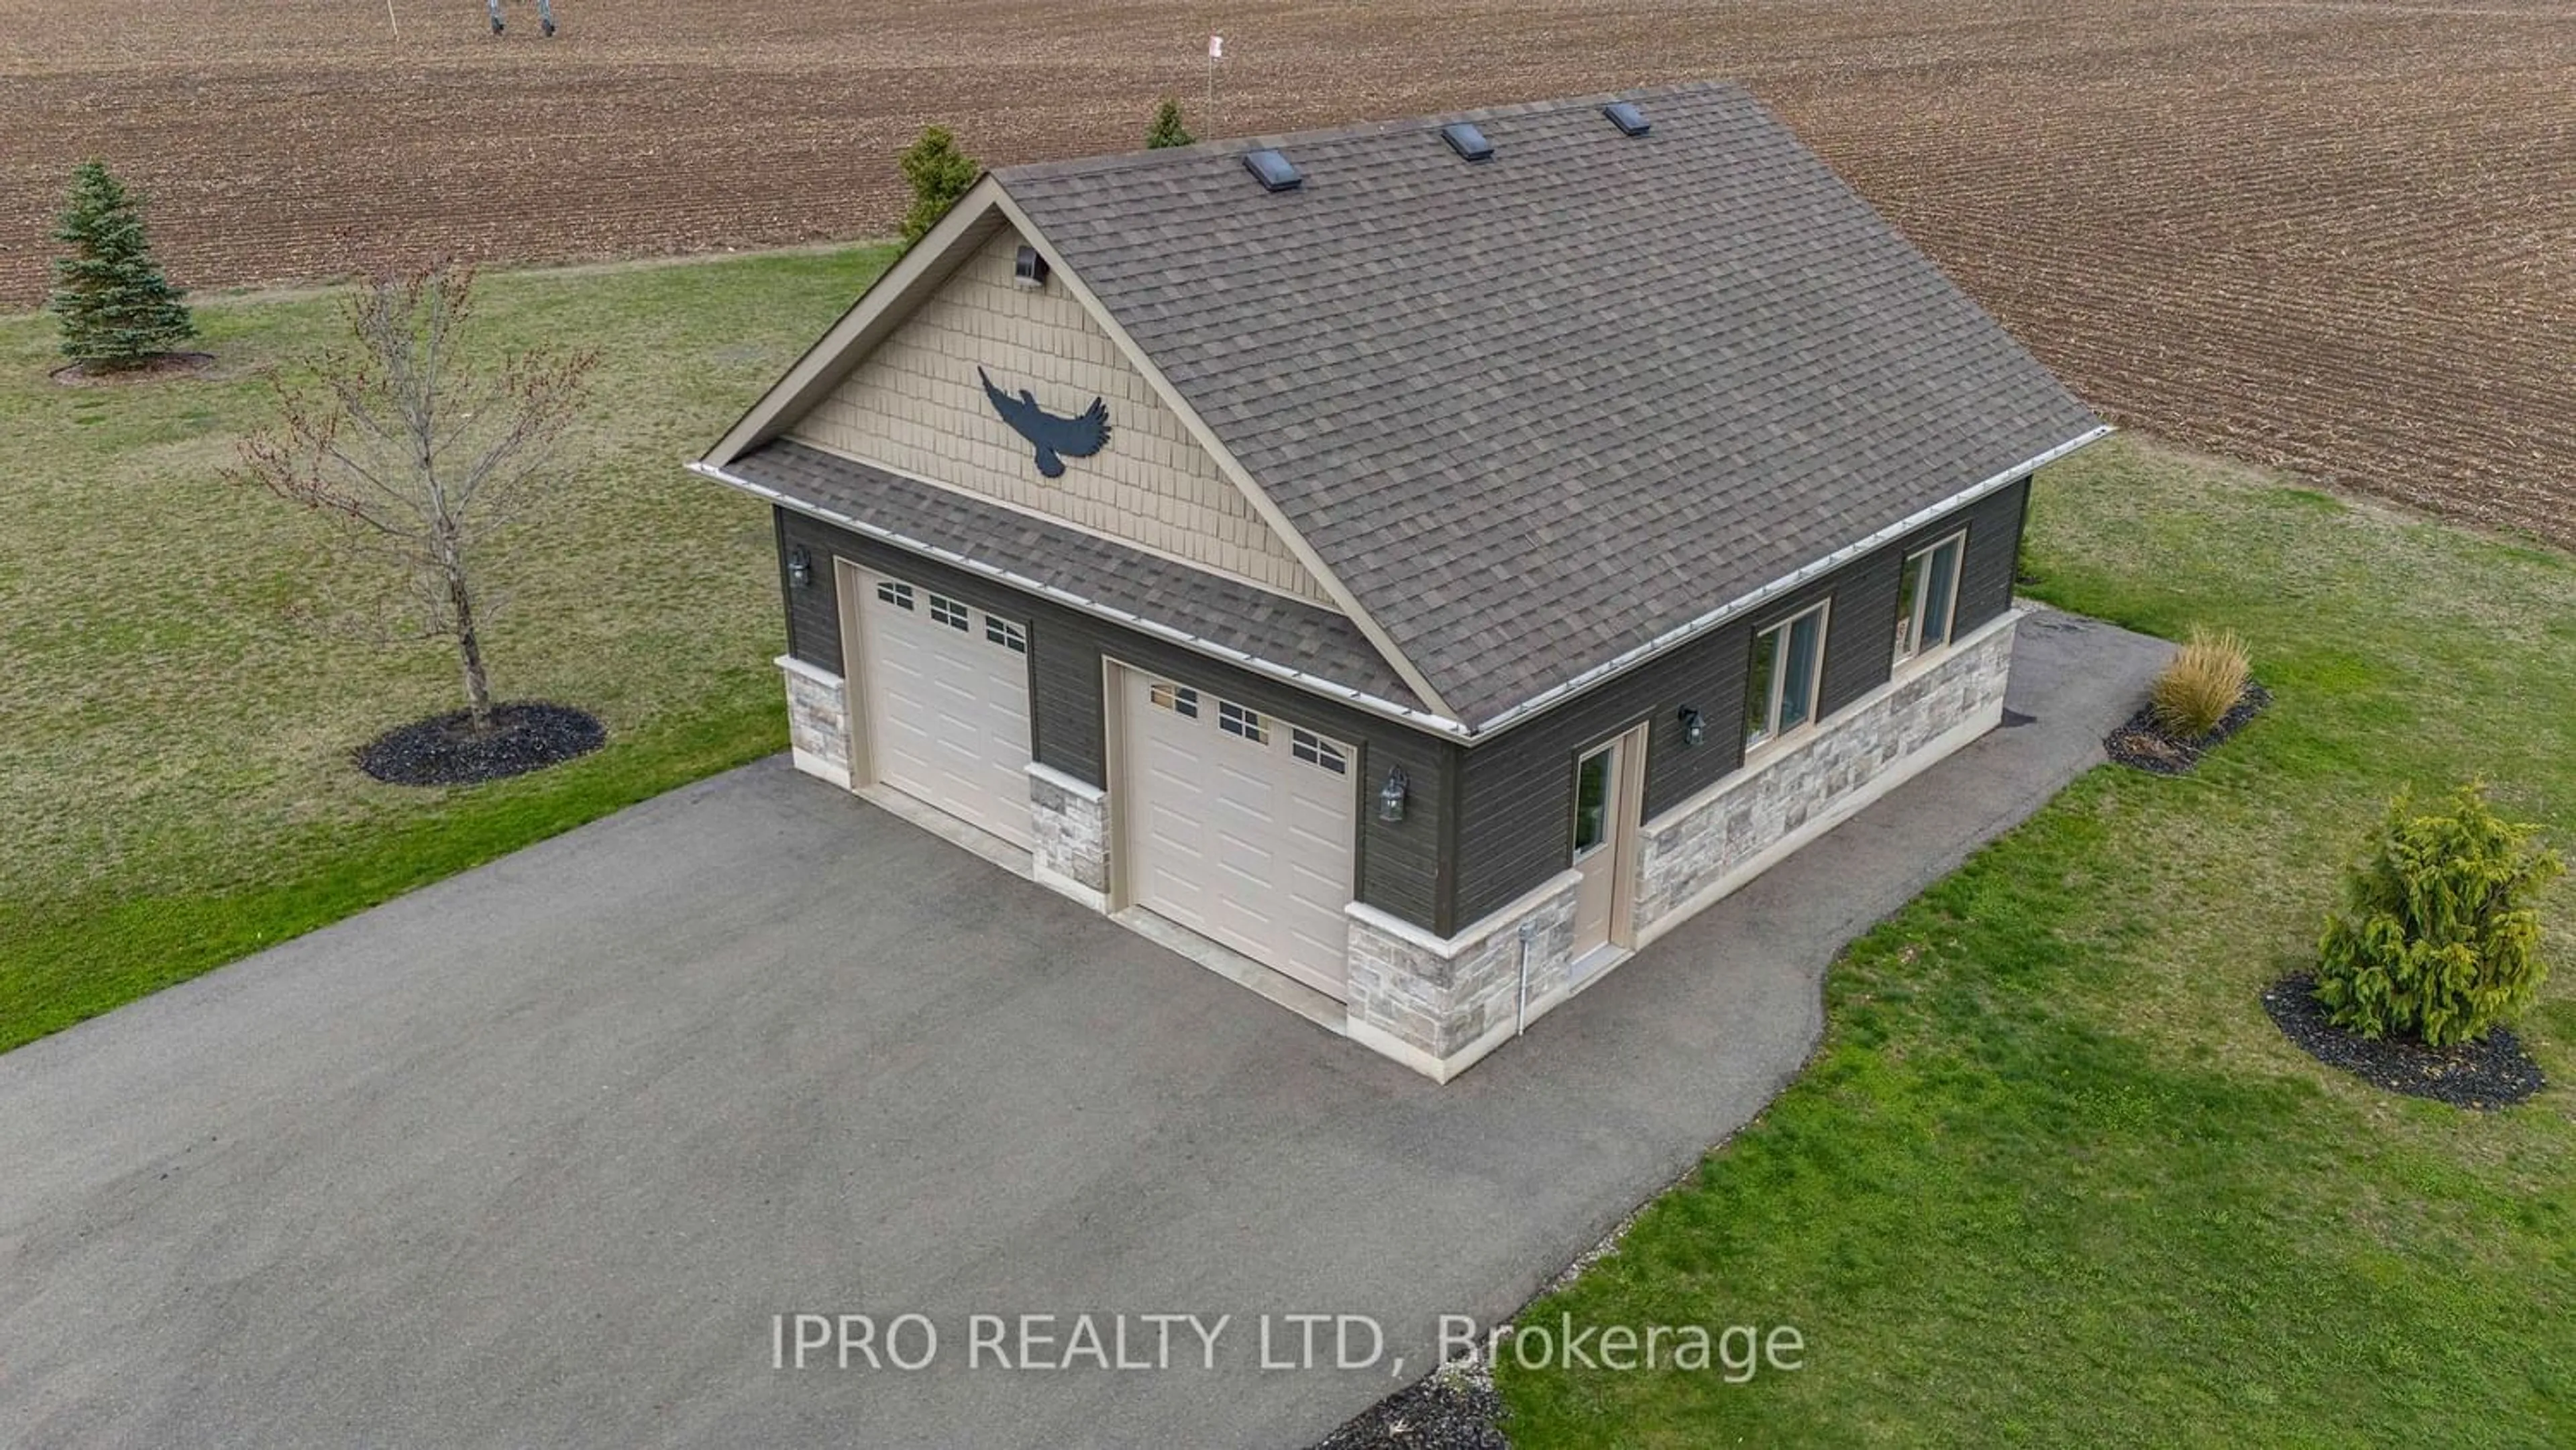 Frontside or backside of a home for 5399 Concession Rd 6, Adjala-Tosorontio Ontario L9R 1V3